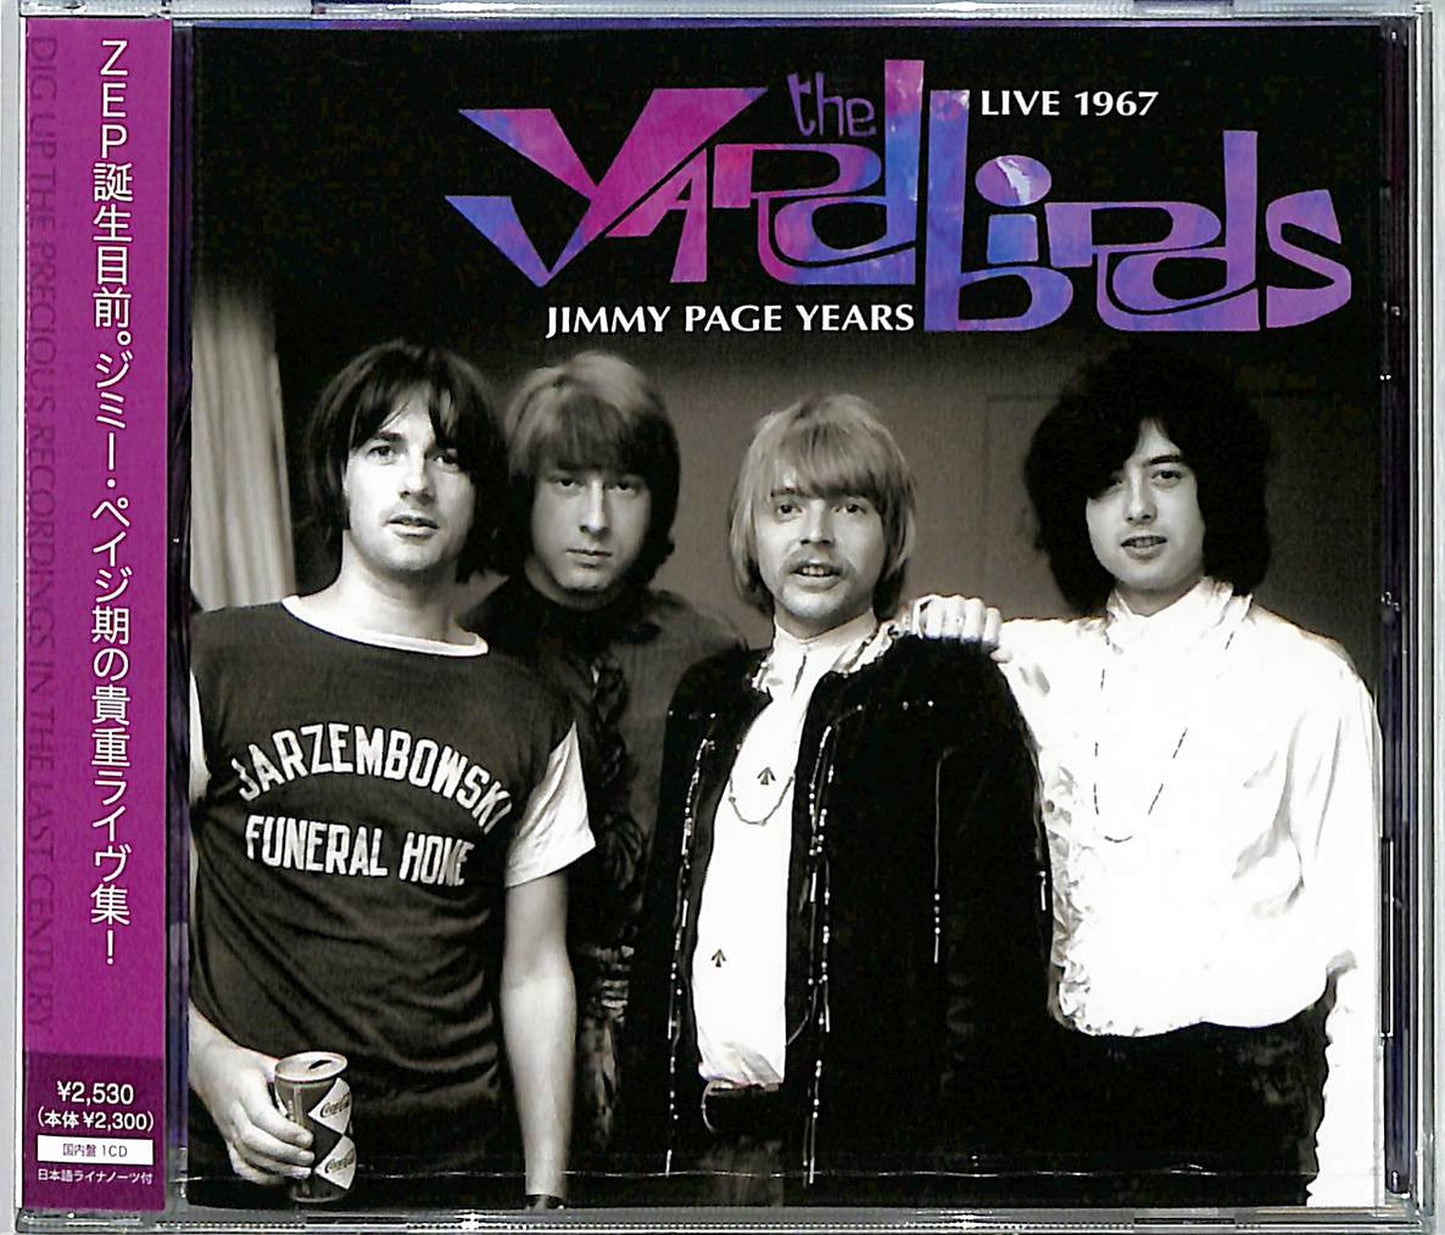 The Yardbirds - Jimmy Page Years  - Japan CD